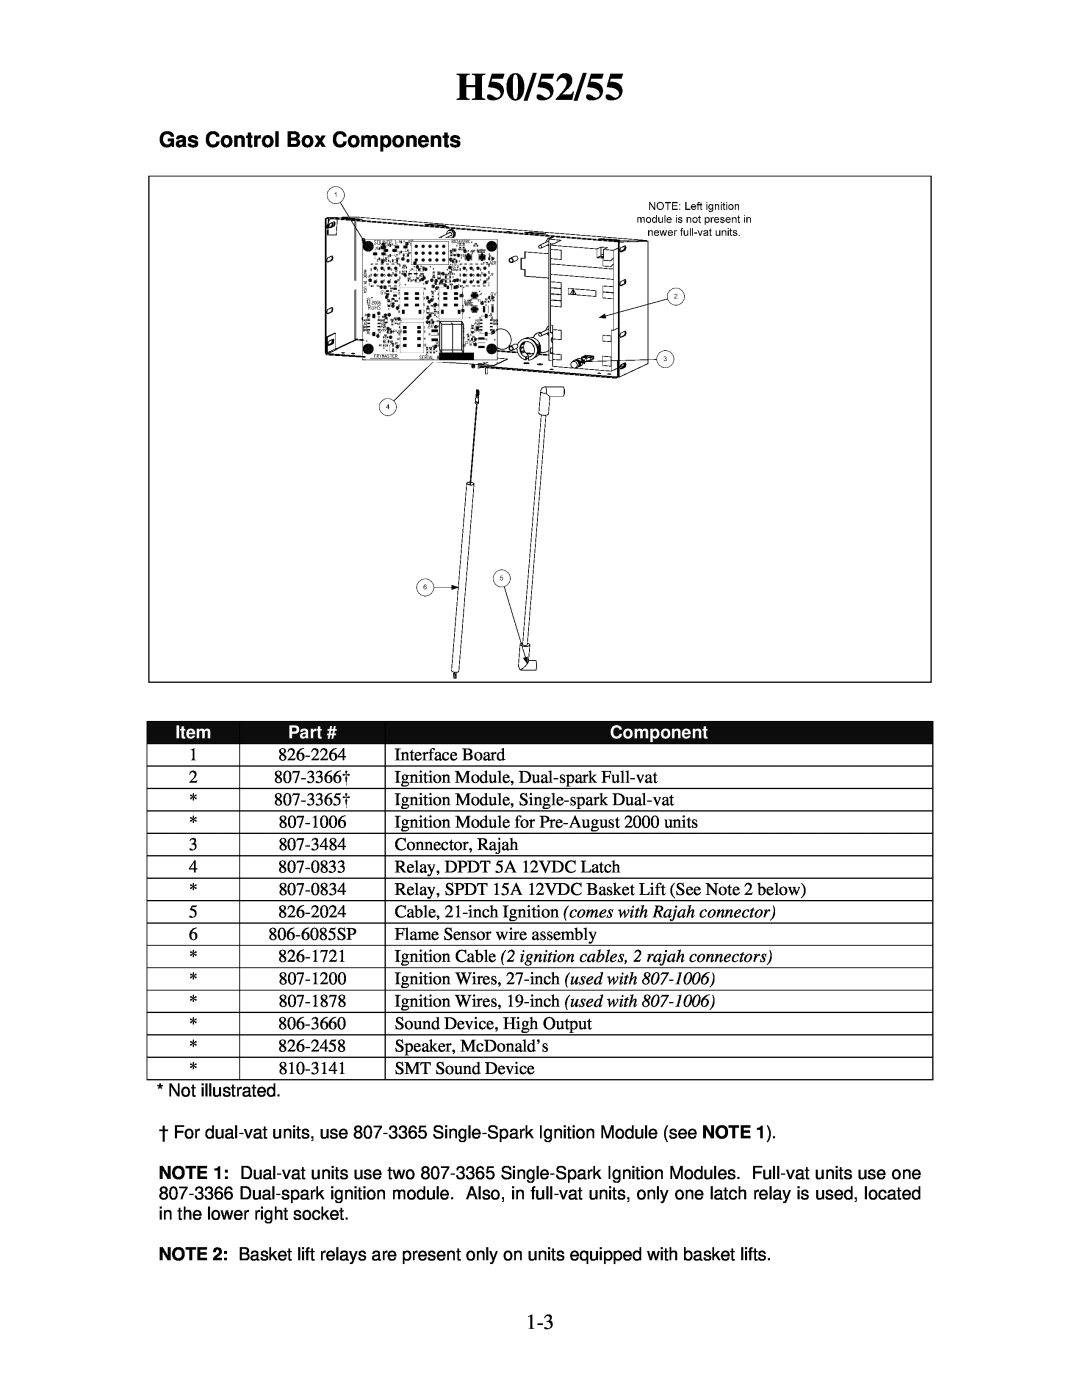 Frymaster 8196321 manual H50/52/55, Gas Control Box Components 